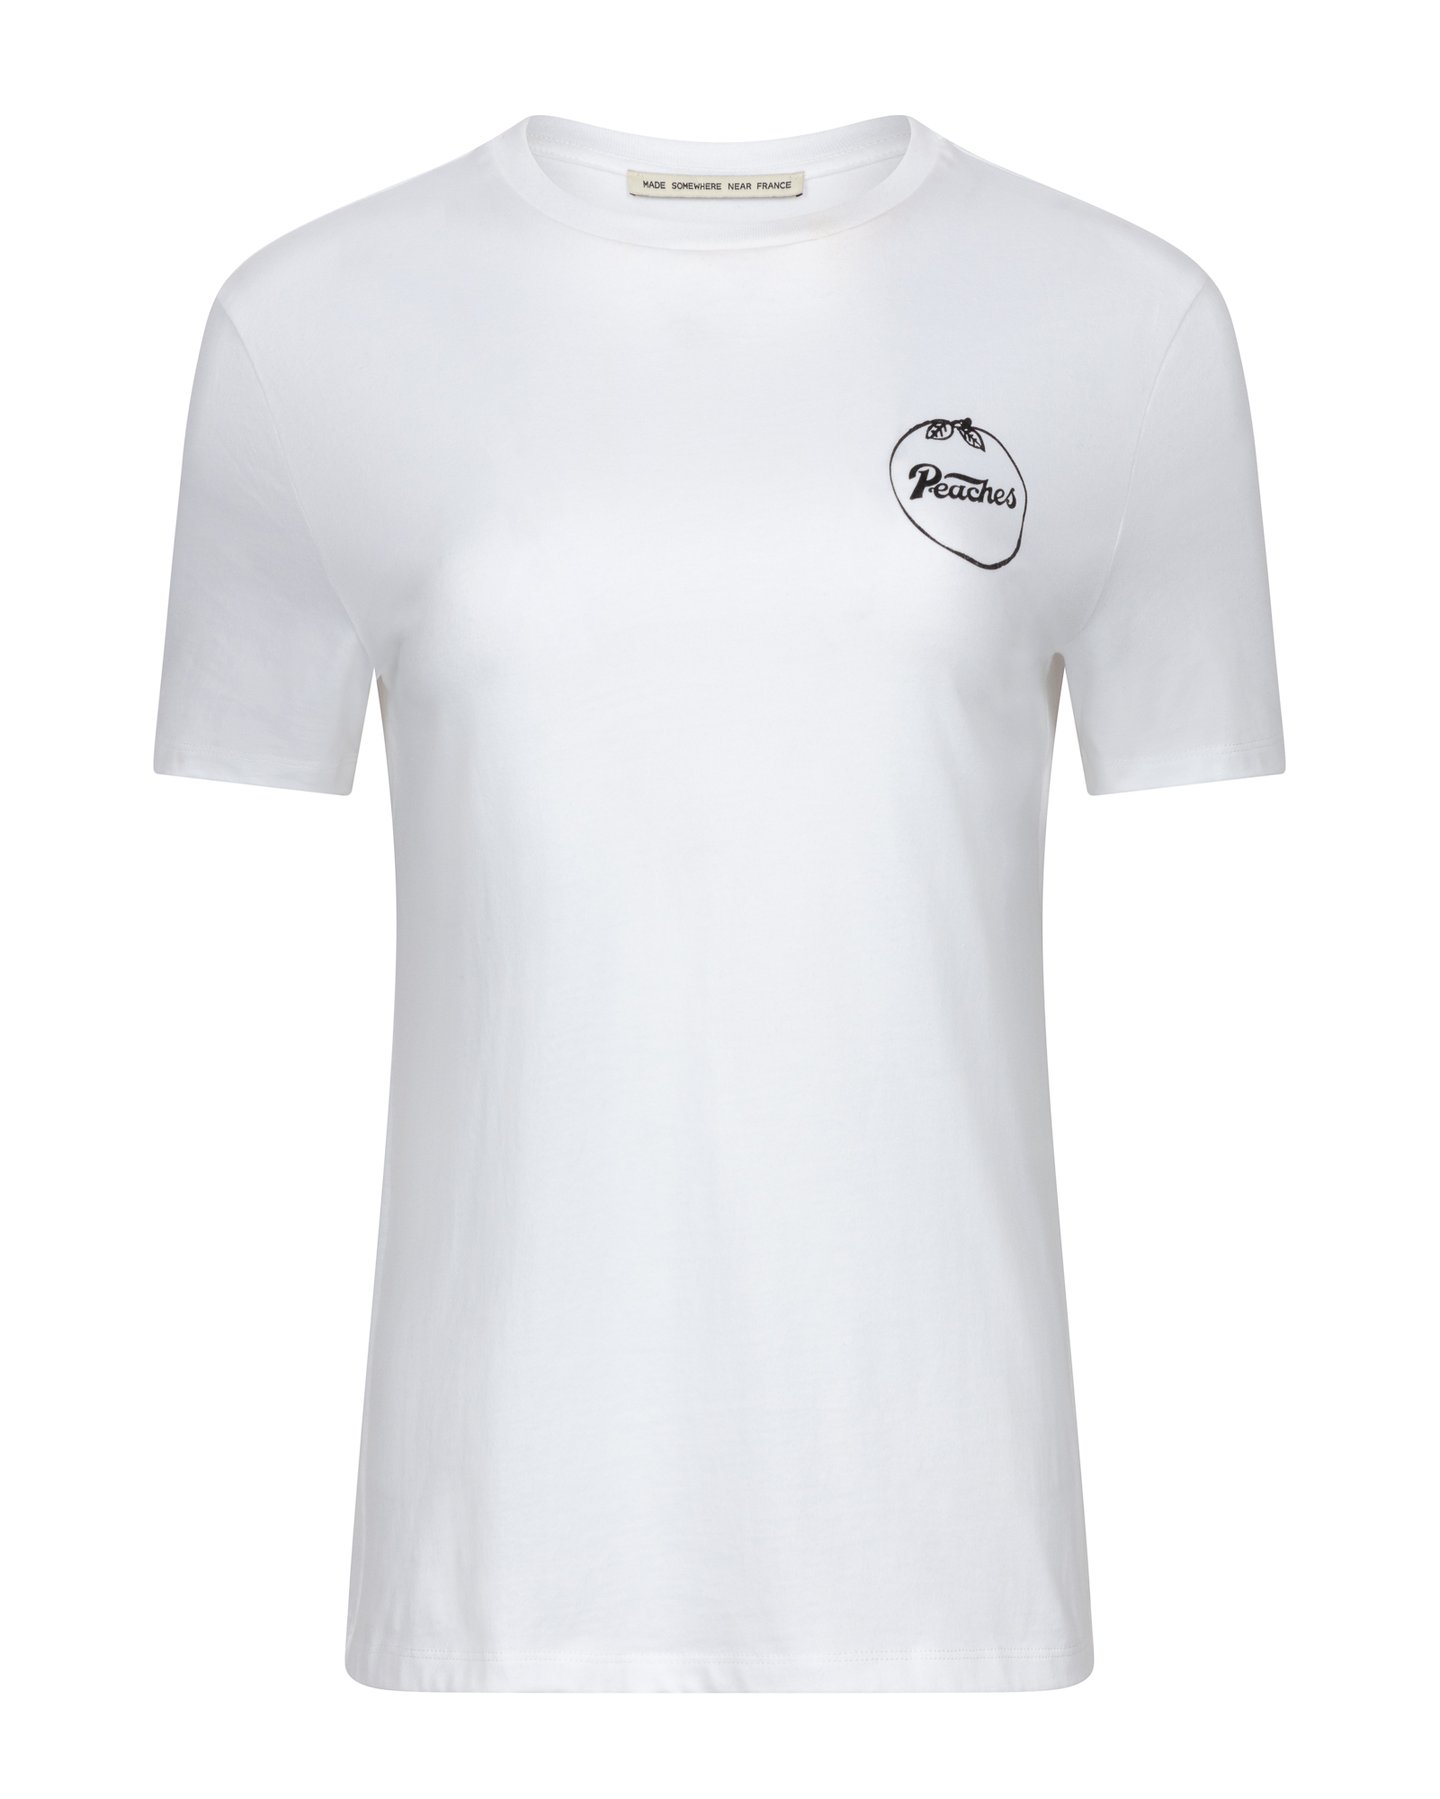 Etre Cecile Peaches Classic T-Shirt - White 